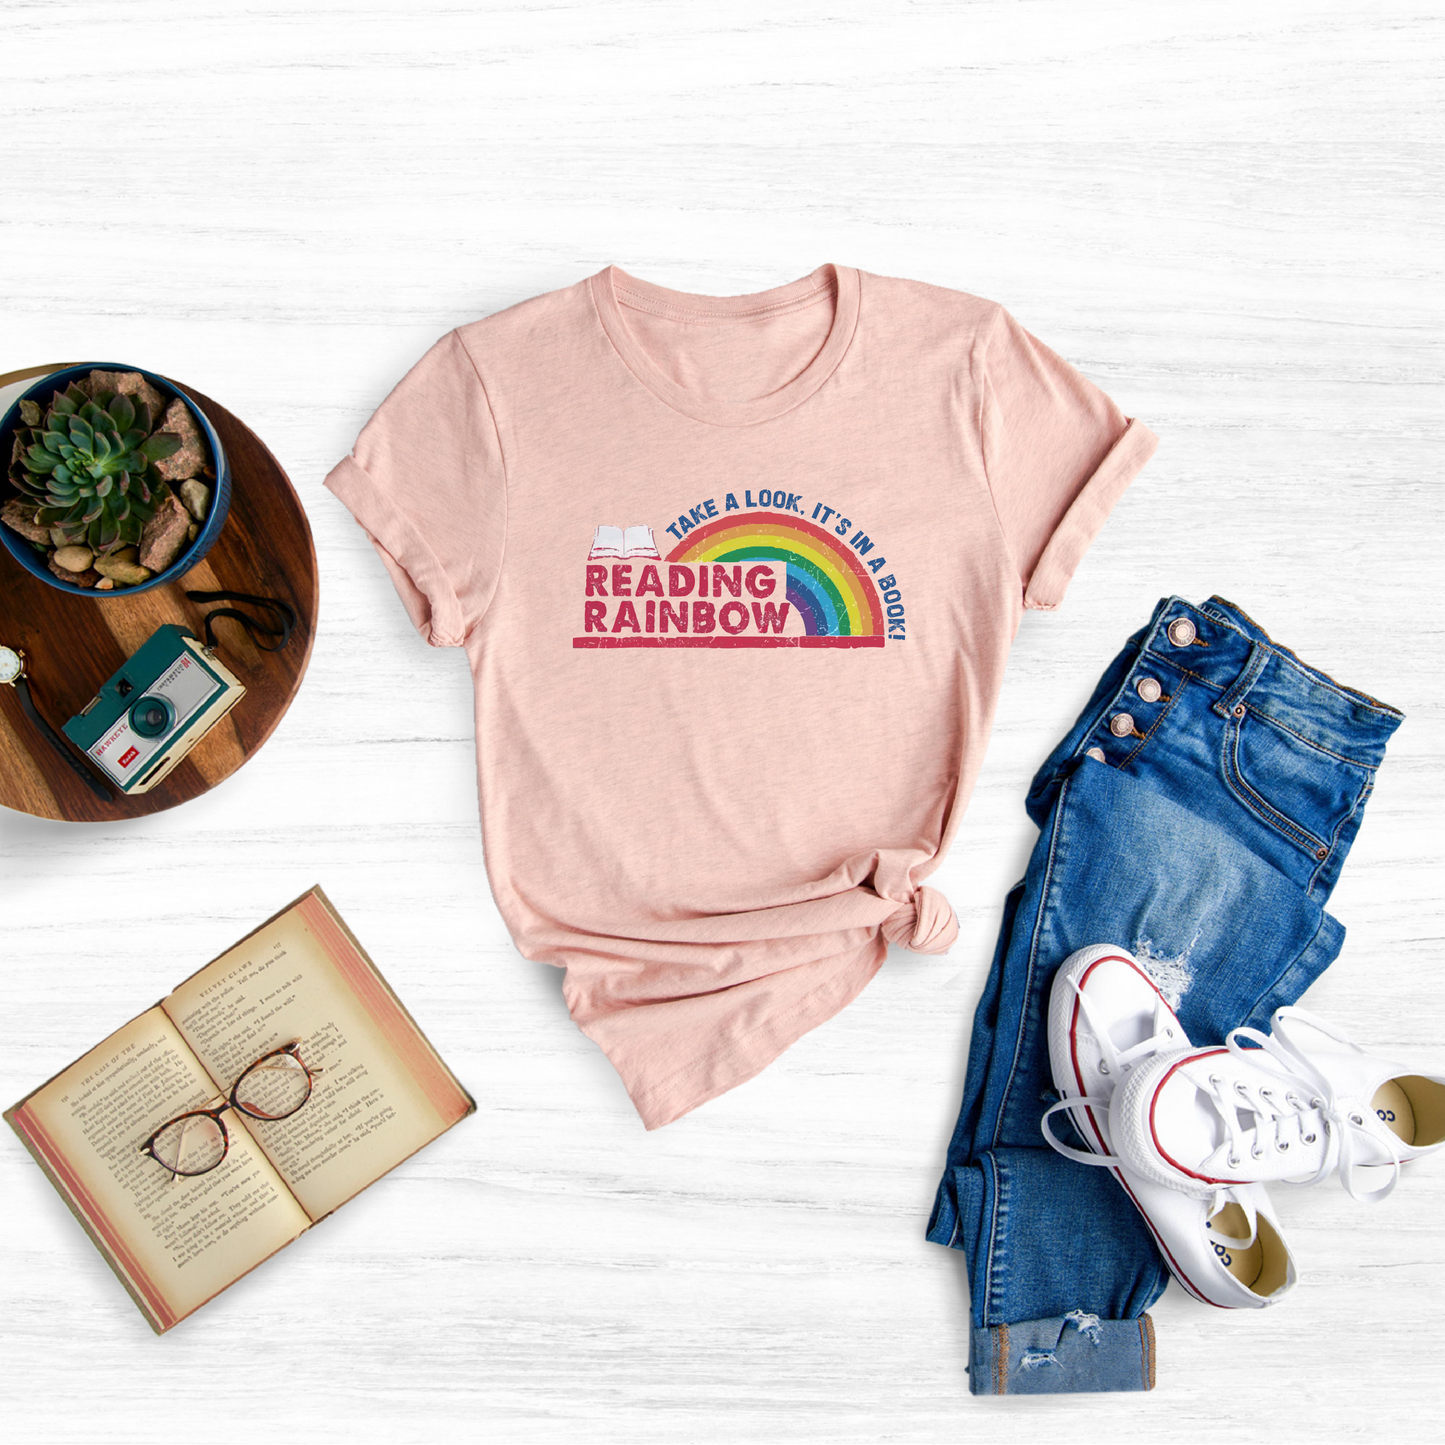 Journey Back to Childhood with the Nostalgic "Reading Rainbow Shirt, Retro Comfort Rainbow School Shirt"